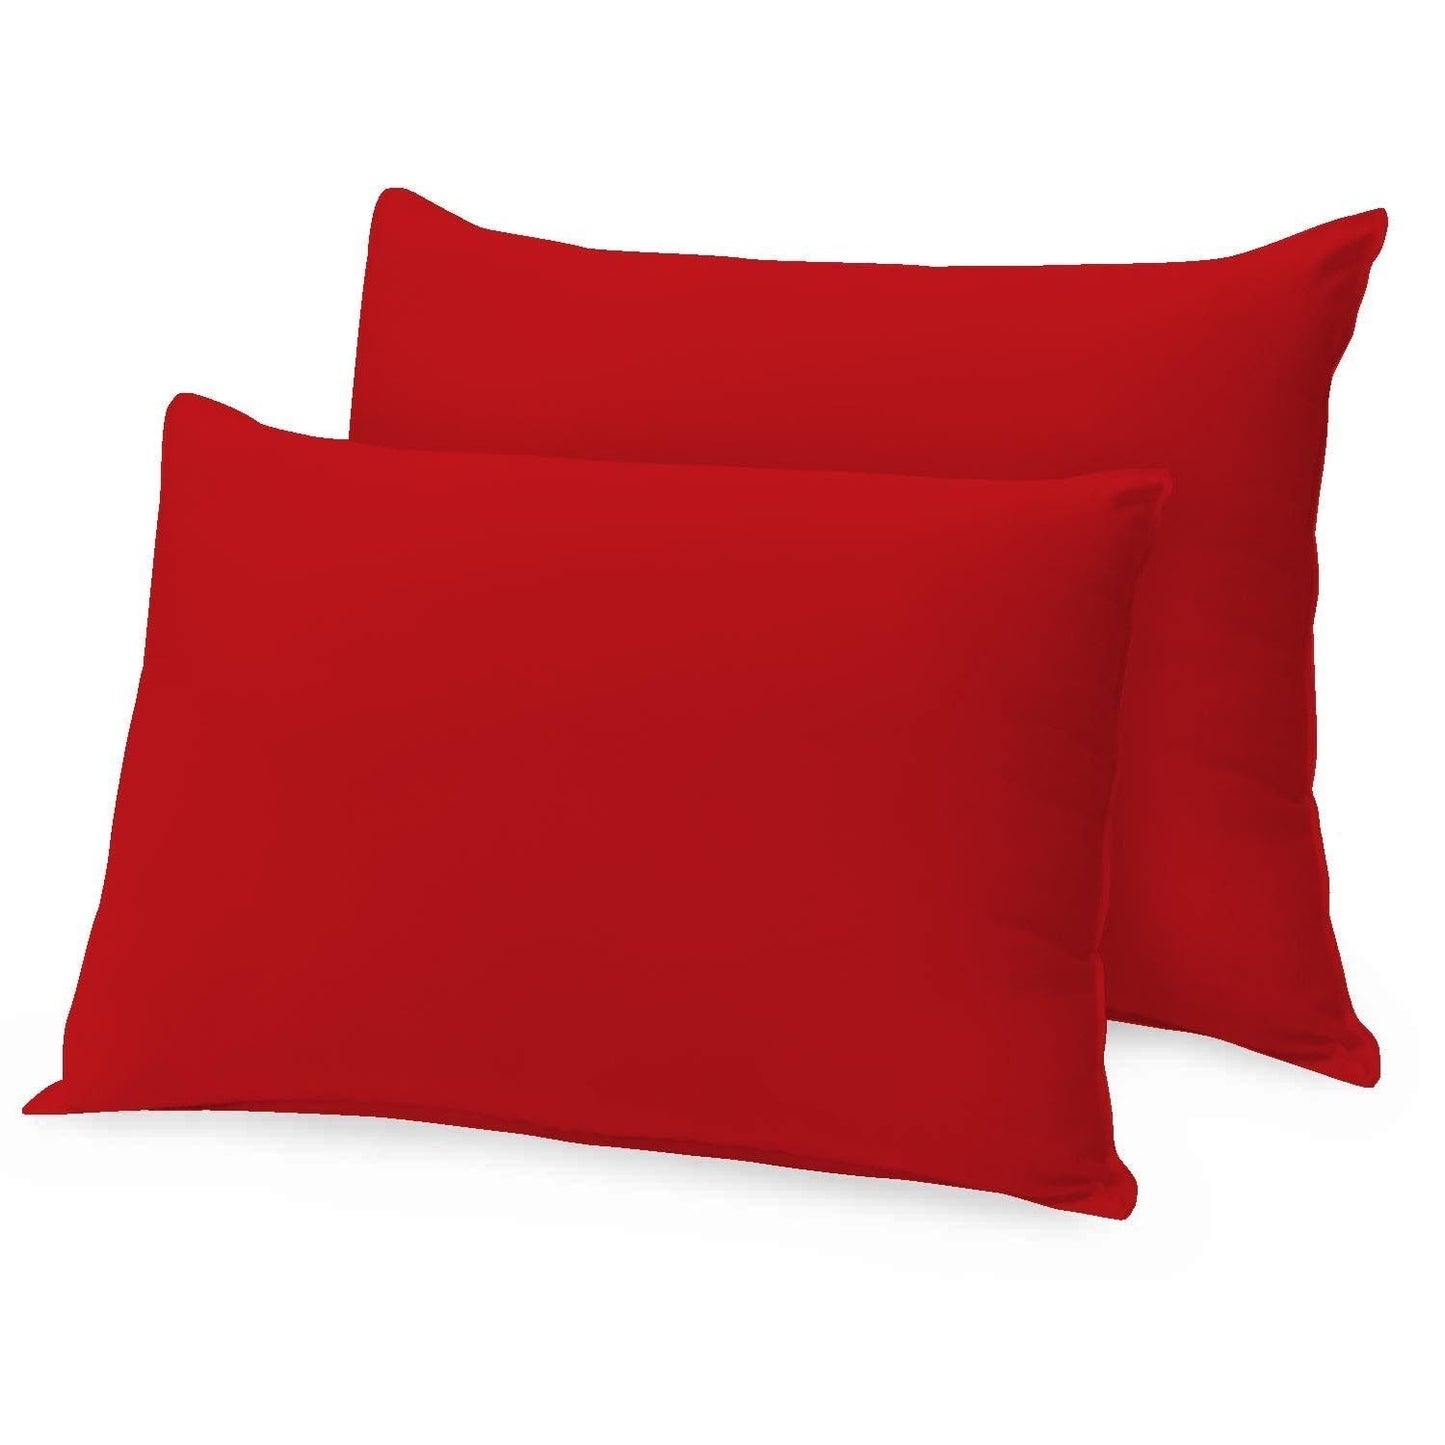 Plain Dye Polycotton Pillowcase - TheComfortshop.co.ukPillow Case0721718975311thecomfortshopTheComfortshop.co.ukPC Red Pillow Case Pair OnlyRedPlain Dye Polycotton Pillowcase - TheComfortshop.co.uk